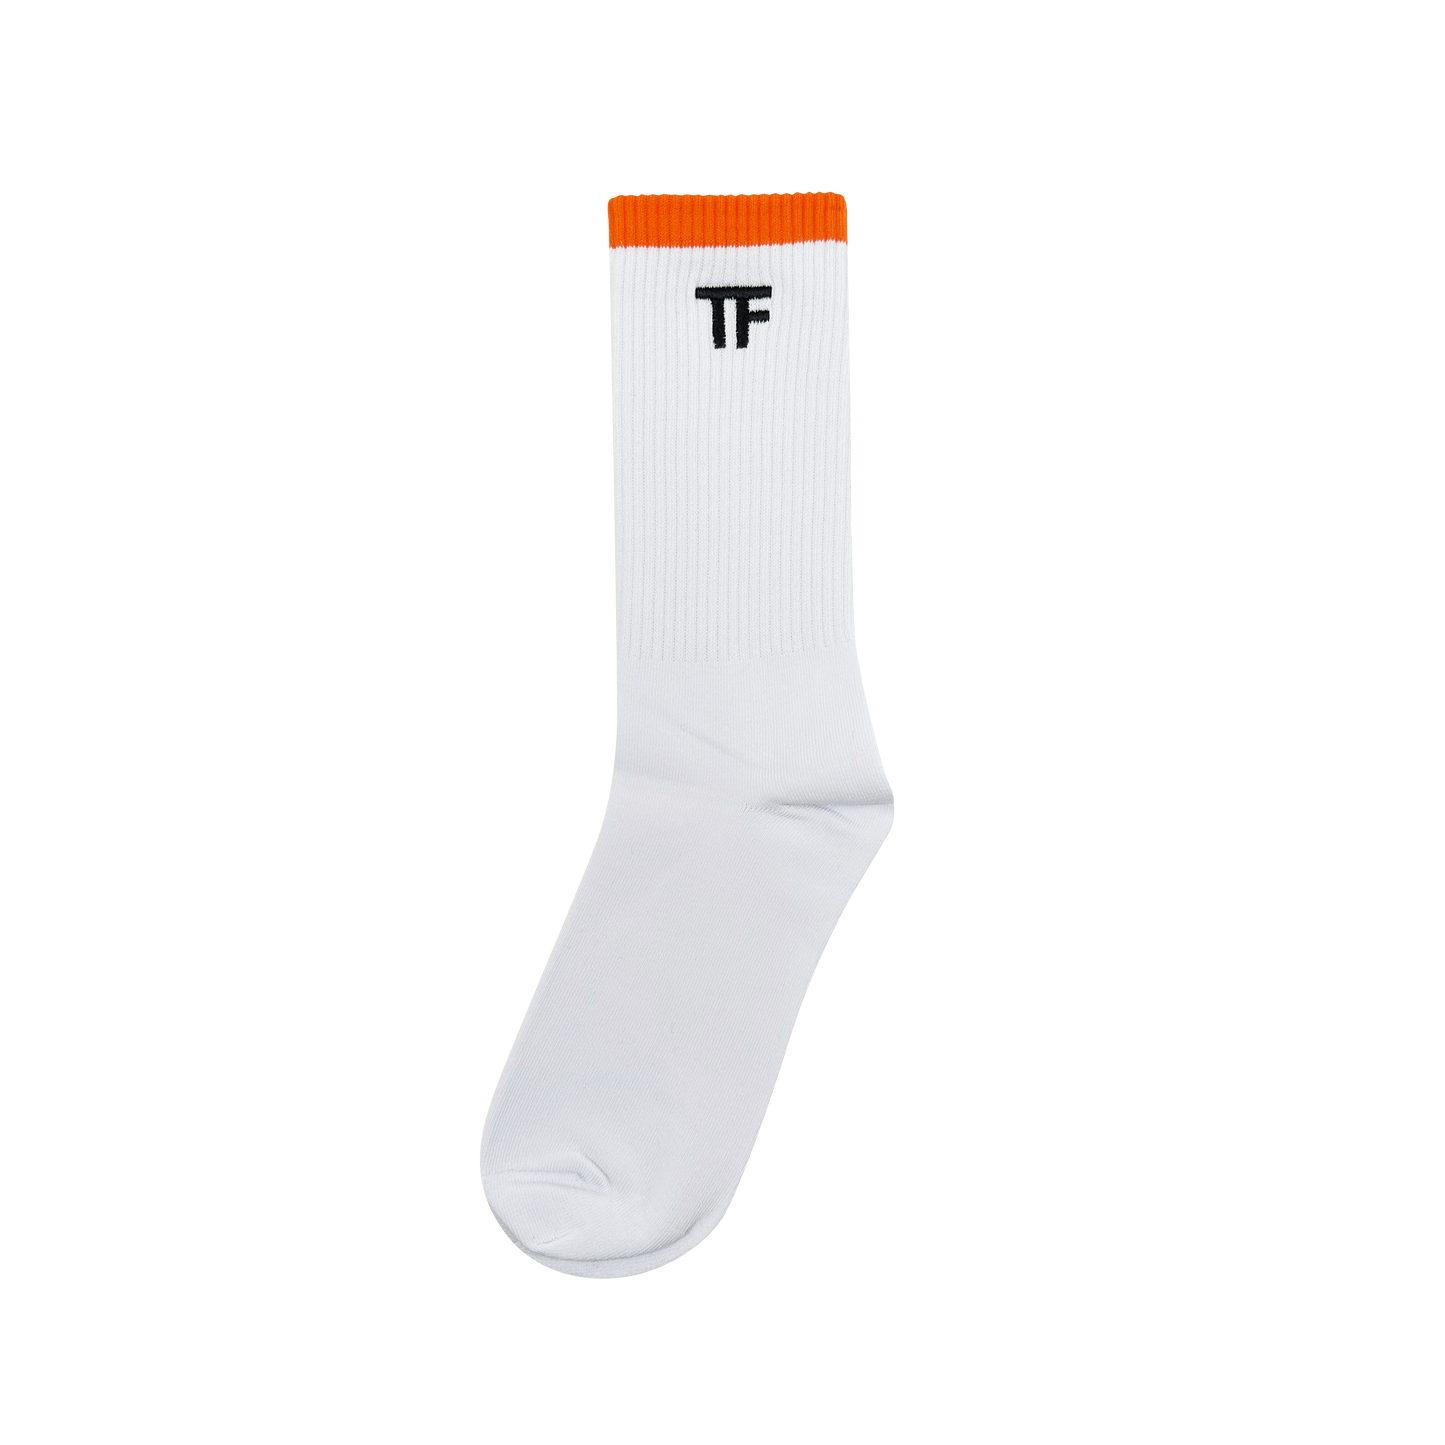 Tom Felton "ORaNgE" Socks